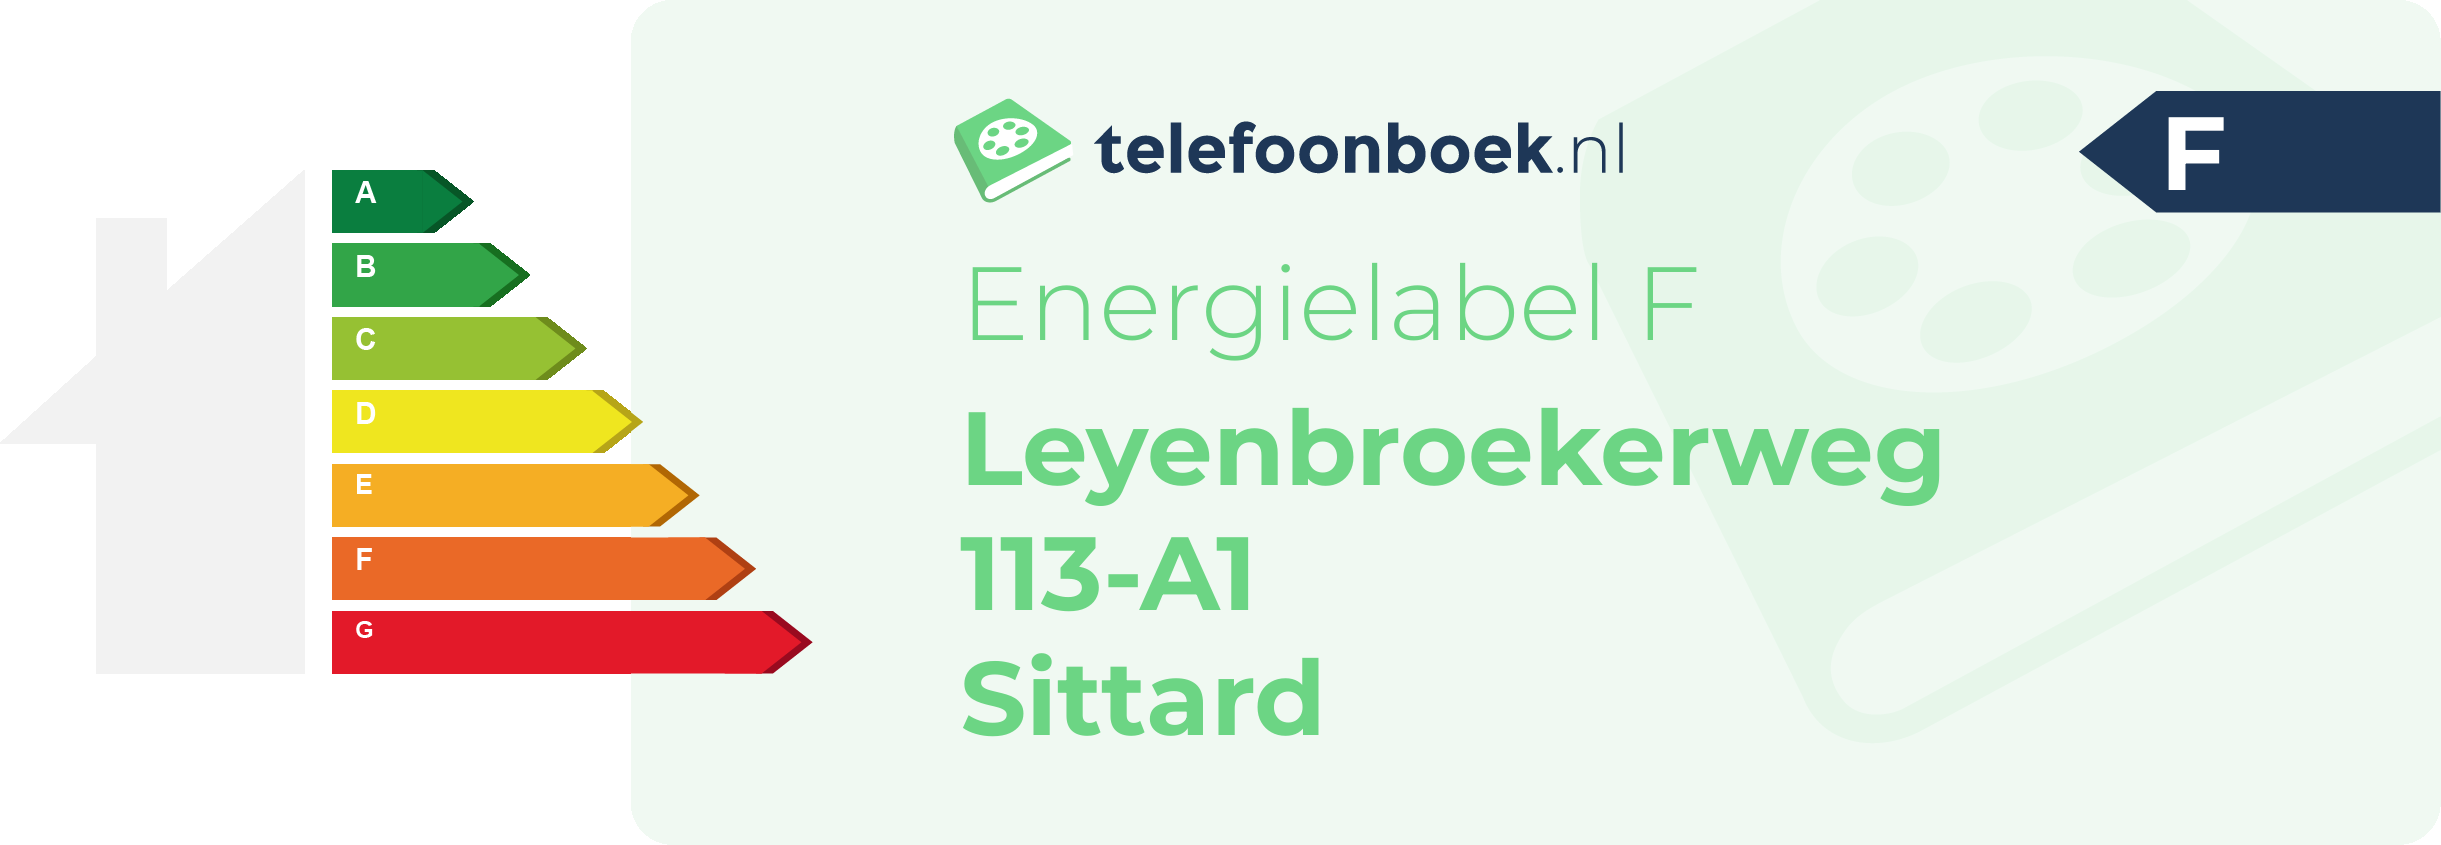 Energielabel Leyenbroekerweg 113-A1 Sittard